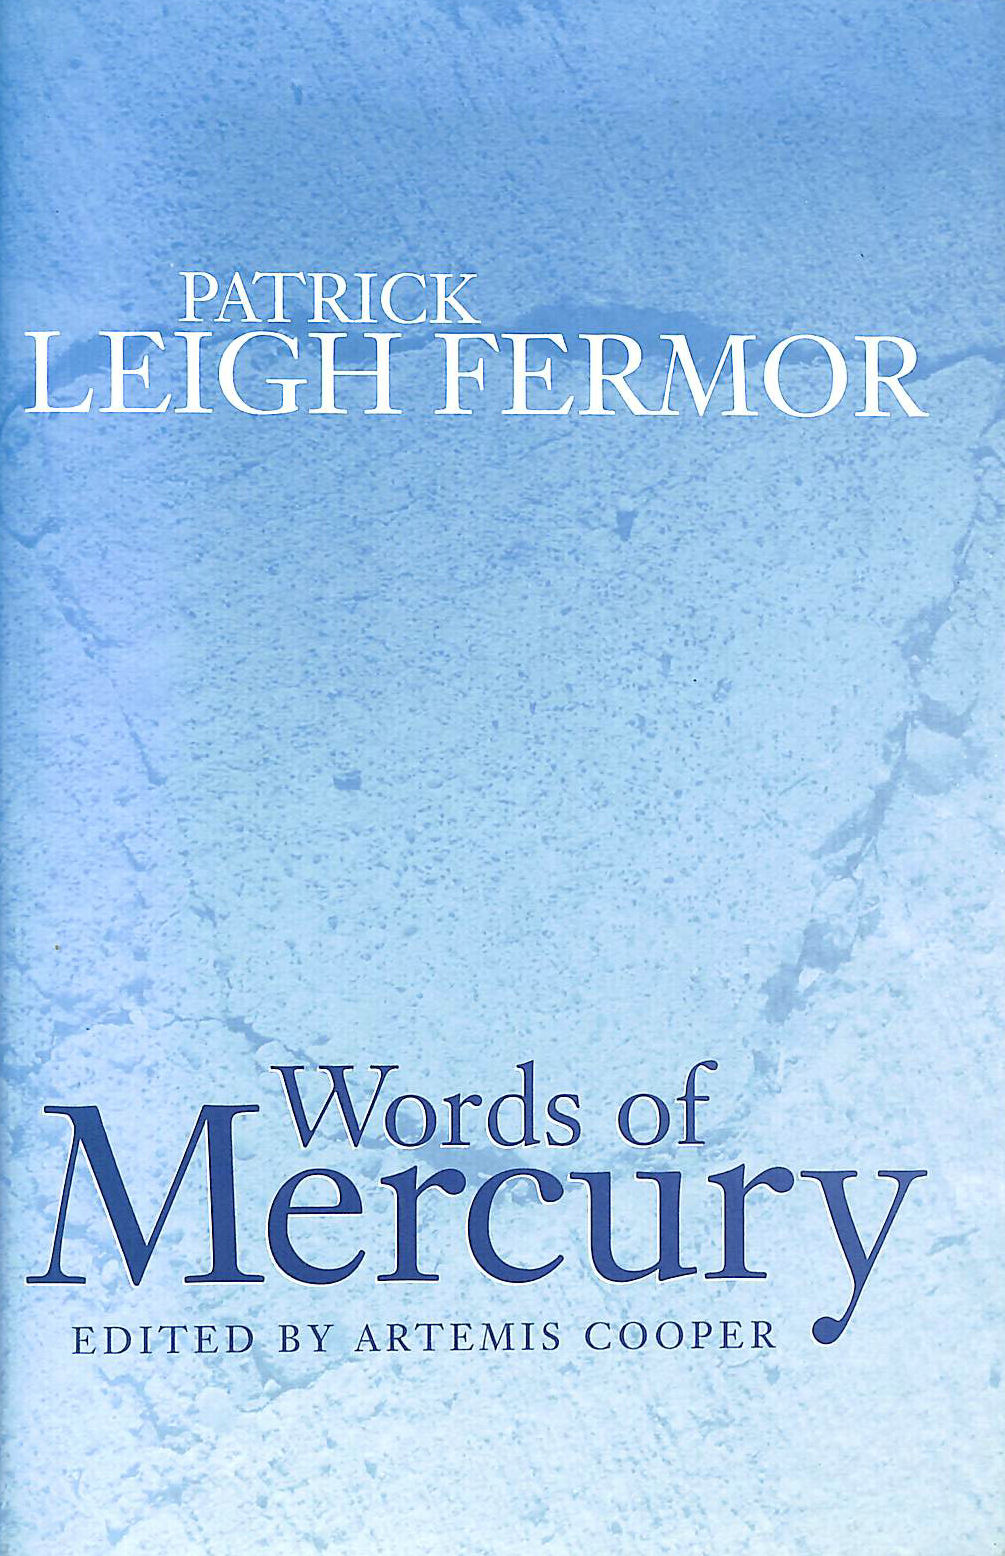 LEIGH FERMOR, PATRICK - Words of Mercury